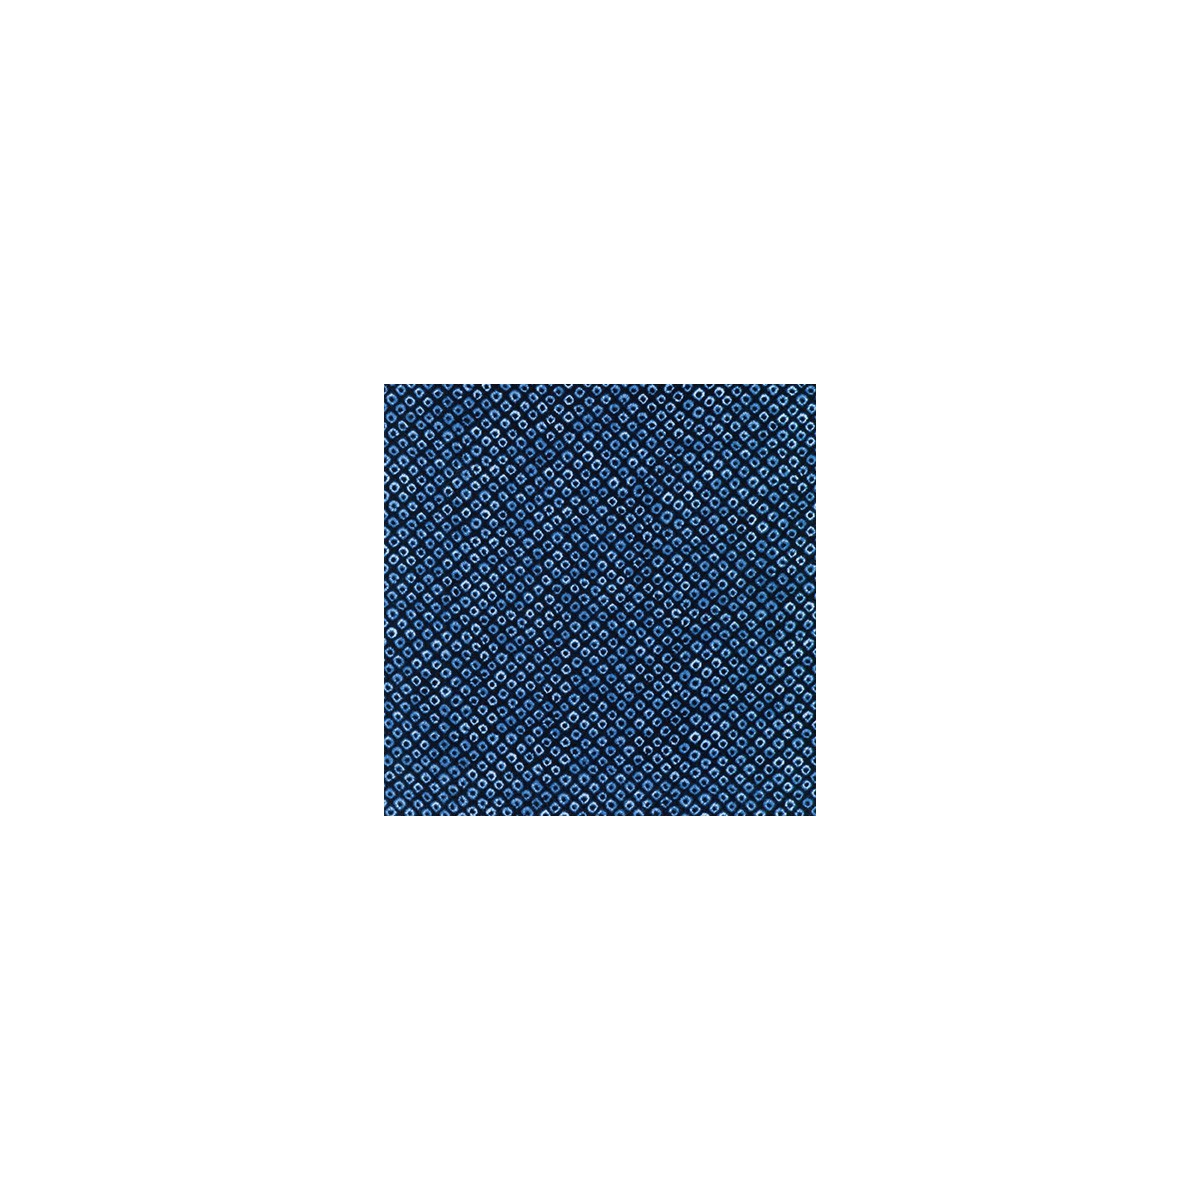 P135-SB-580257D1-1 PATCH. AMERICANO SHIBORI BLUES (09) 110 CM. ALG 100% NAVY VENTA EN PZAS. DE 7 M APRO